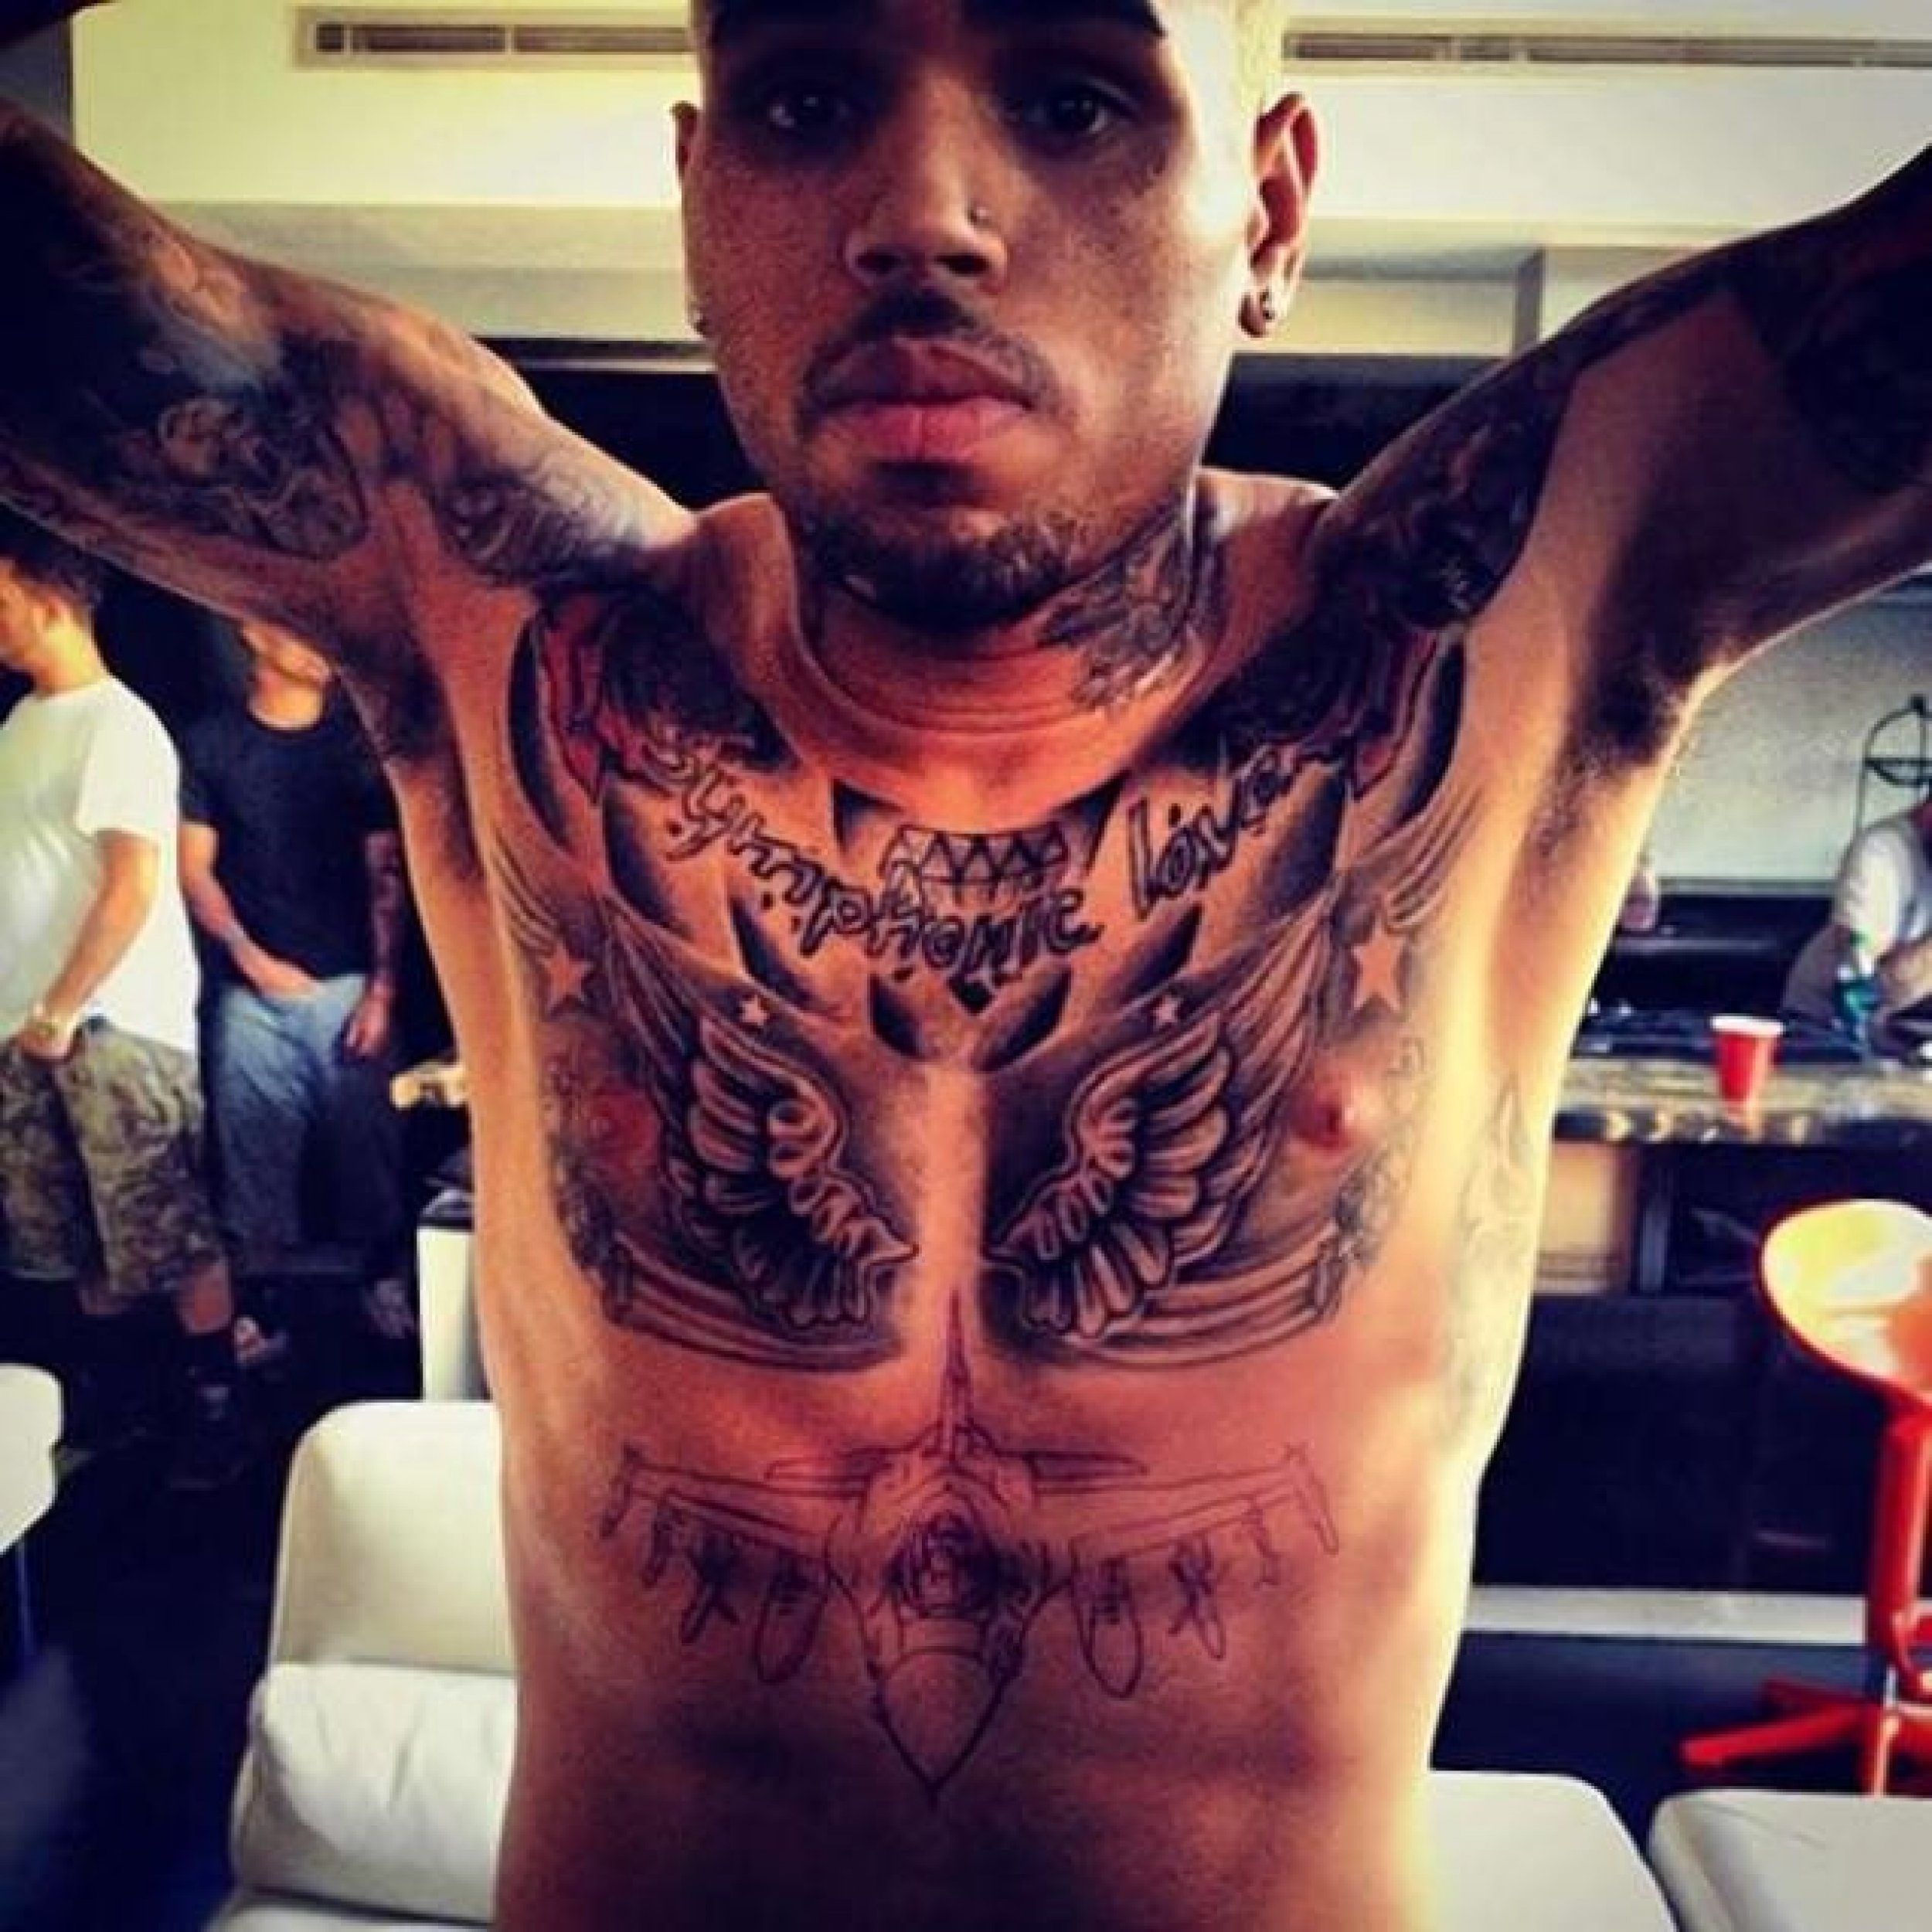 Chris Brown's new tattoo